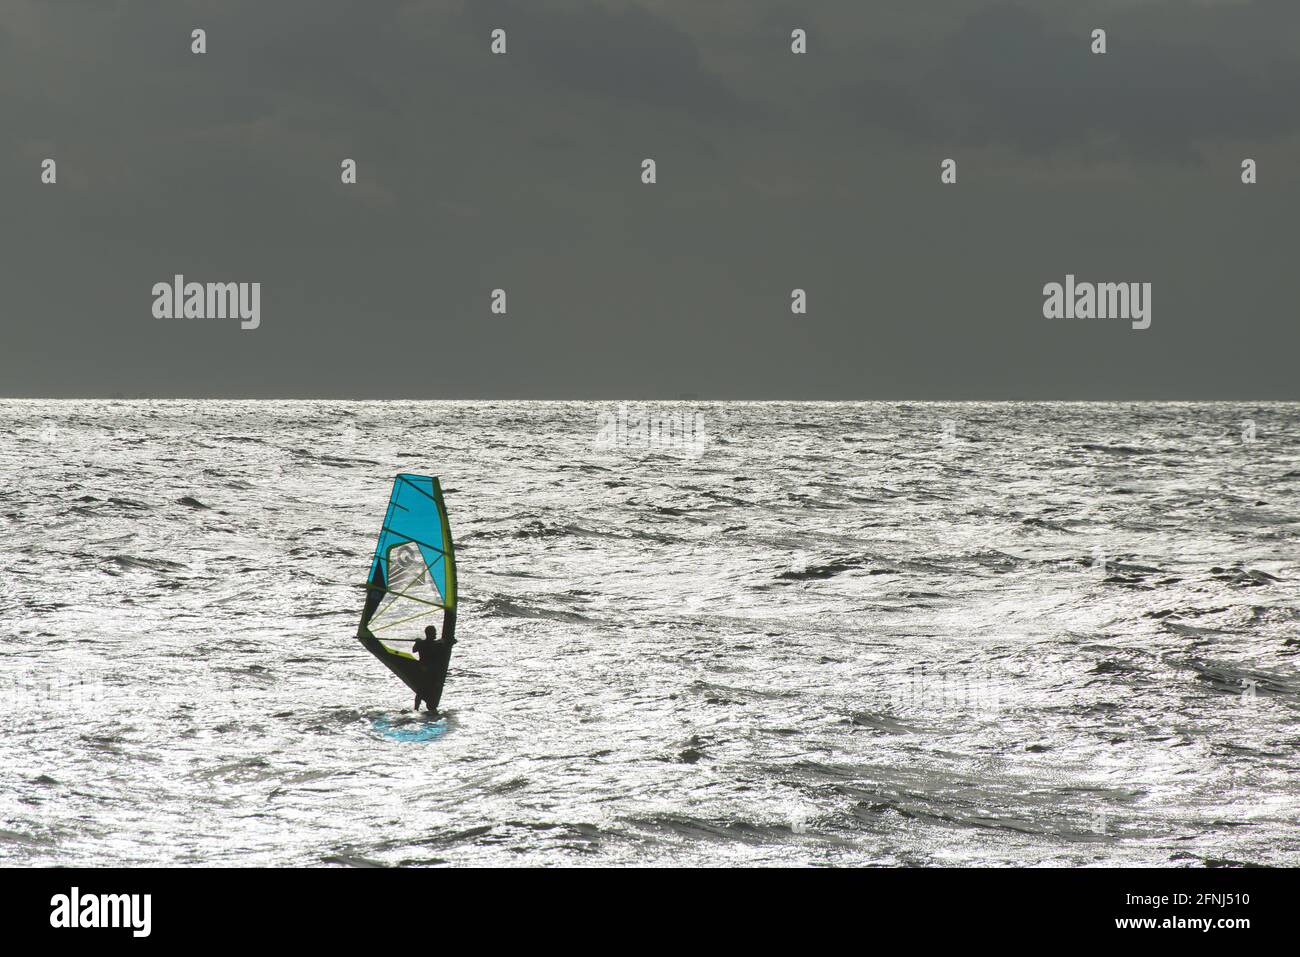 Memorable imagen de un único windsurfista con vela azul un mar plateado con horizonte plateado que separa el cielo oscuro como telón de fondo Foto de stock